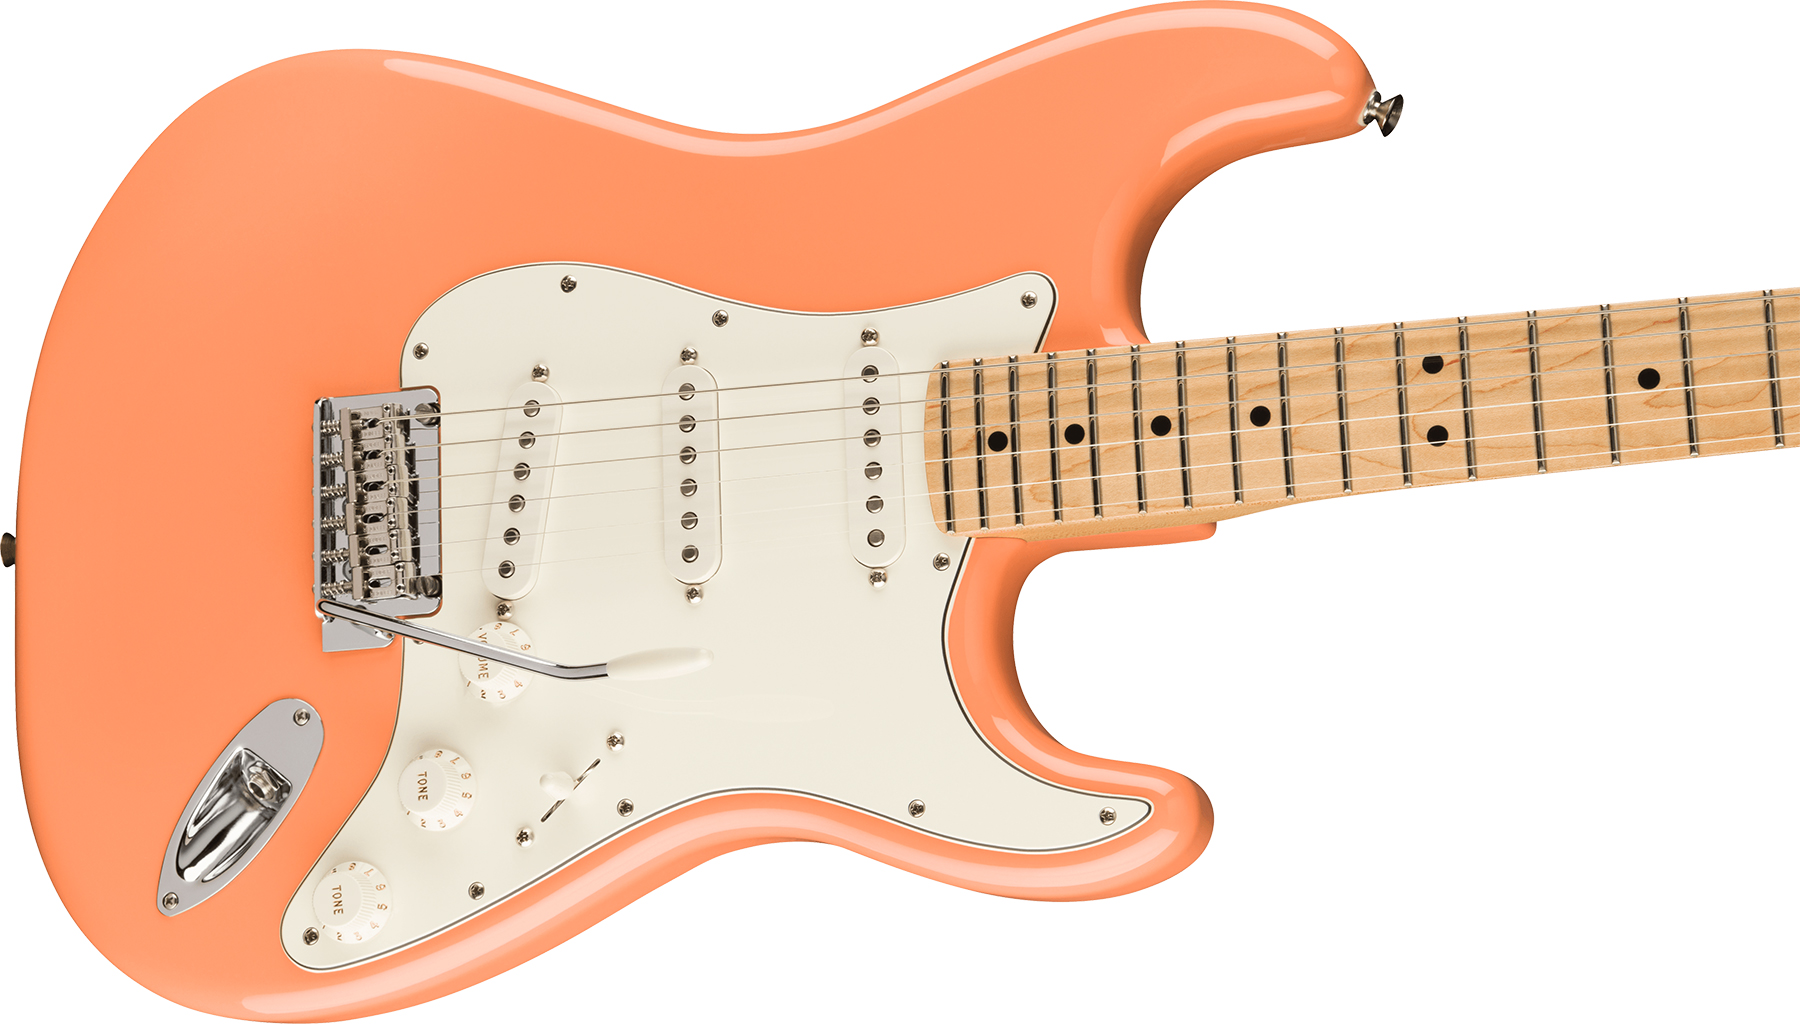 Fender Strat Player Ltd Mex 3s Trem Mn - Pacific Peach - Guitarra eléctrica con forma de str. - Variation 2